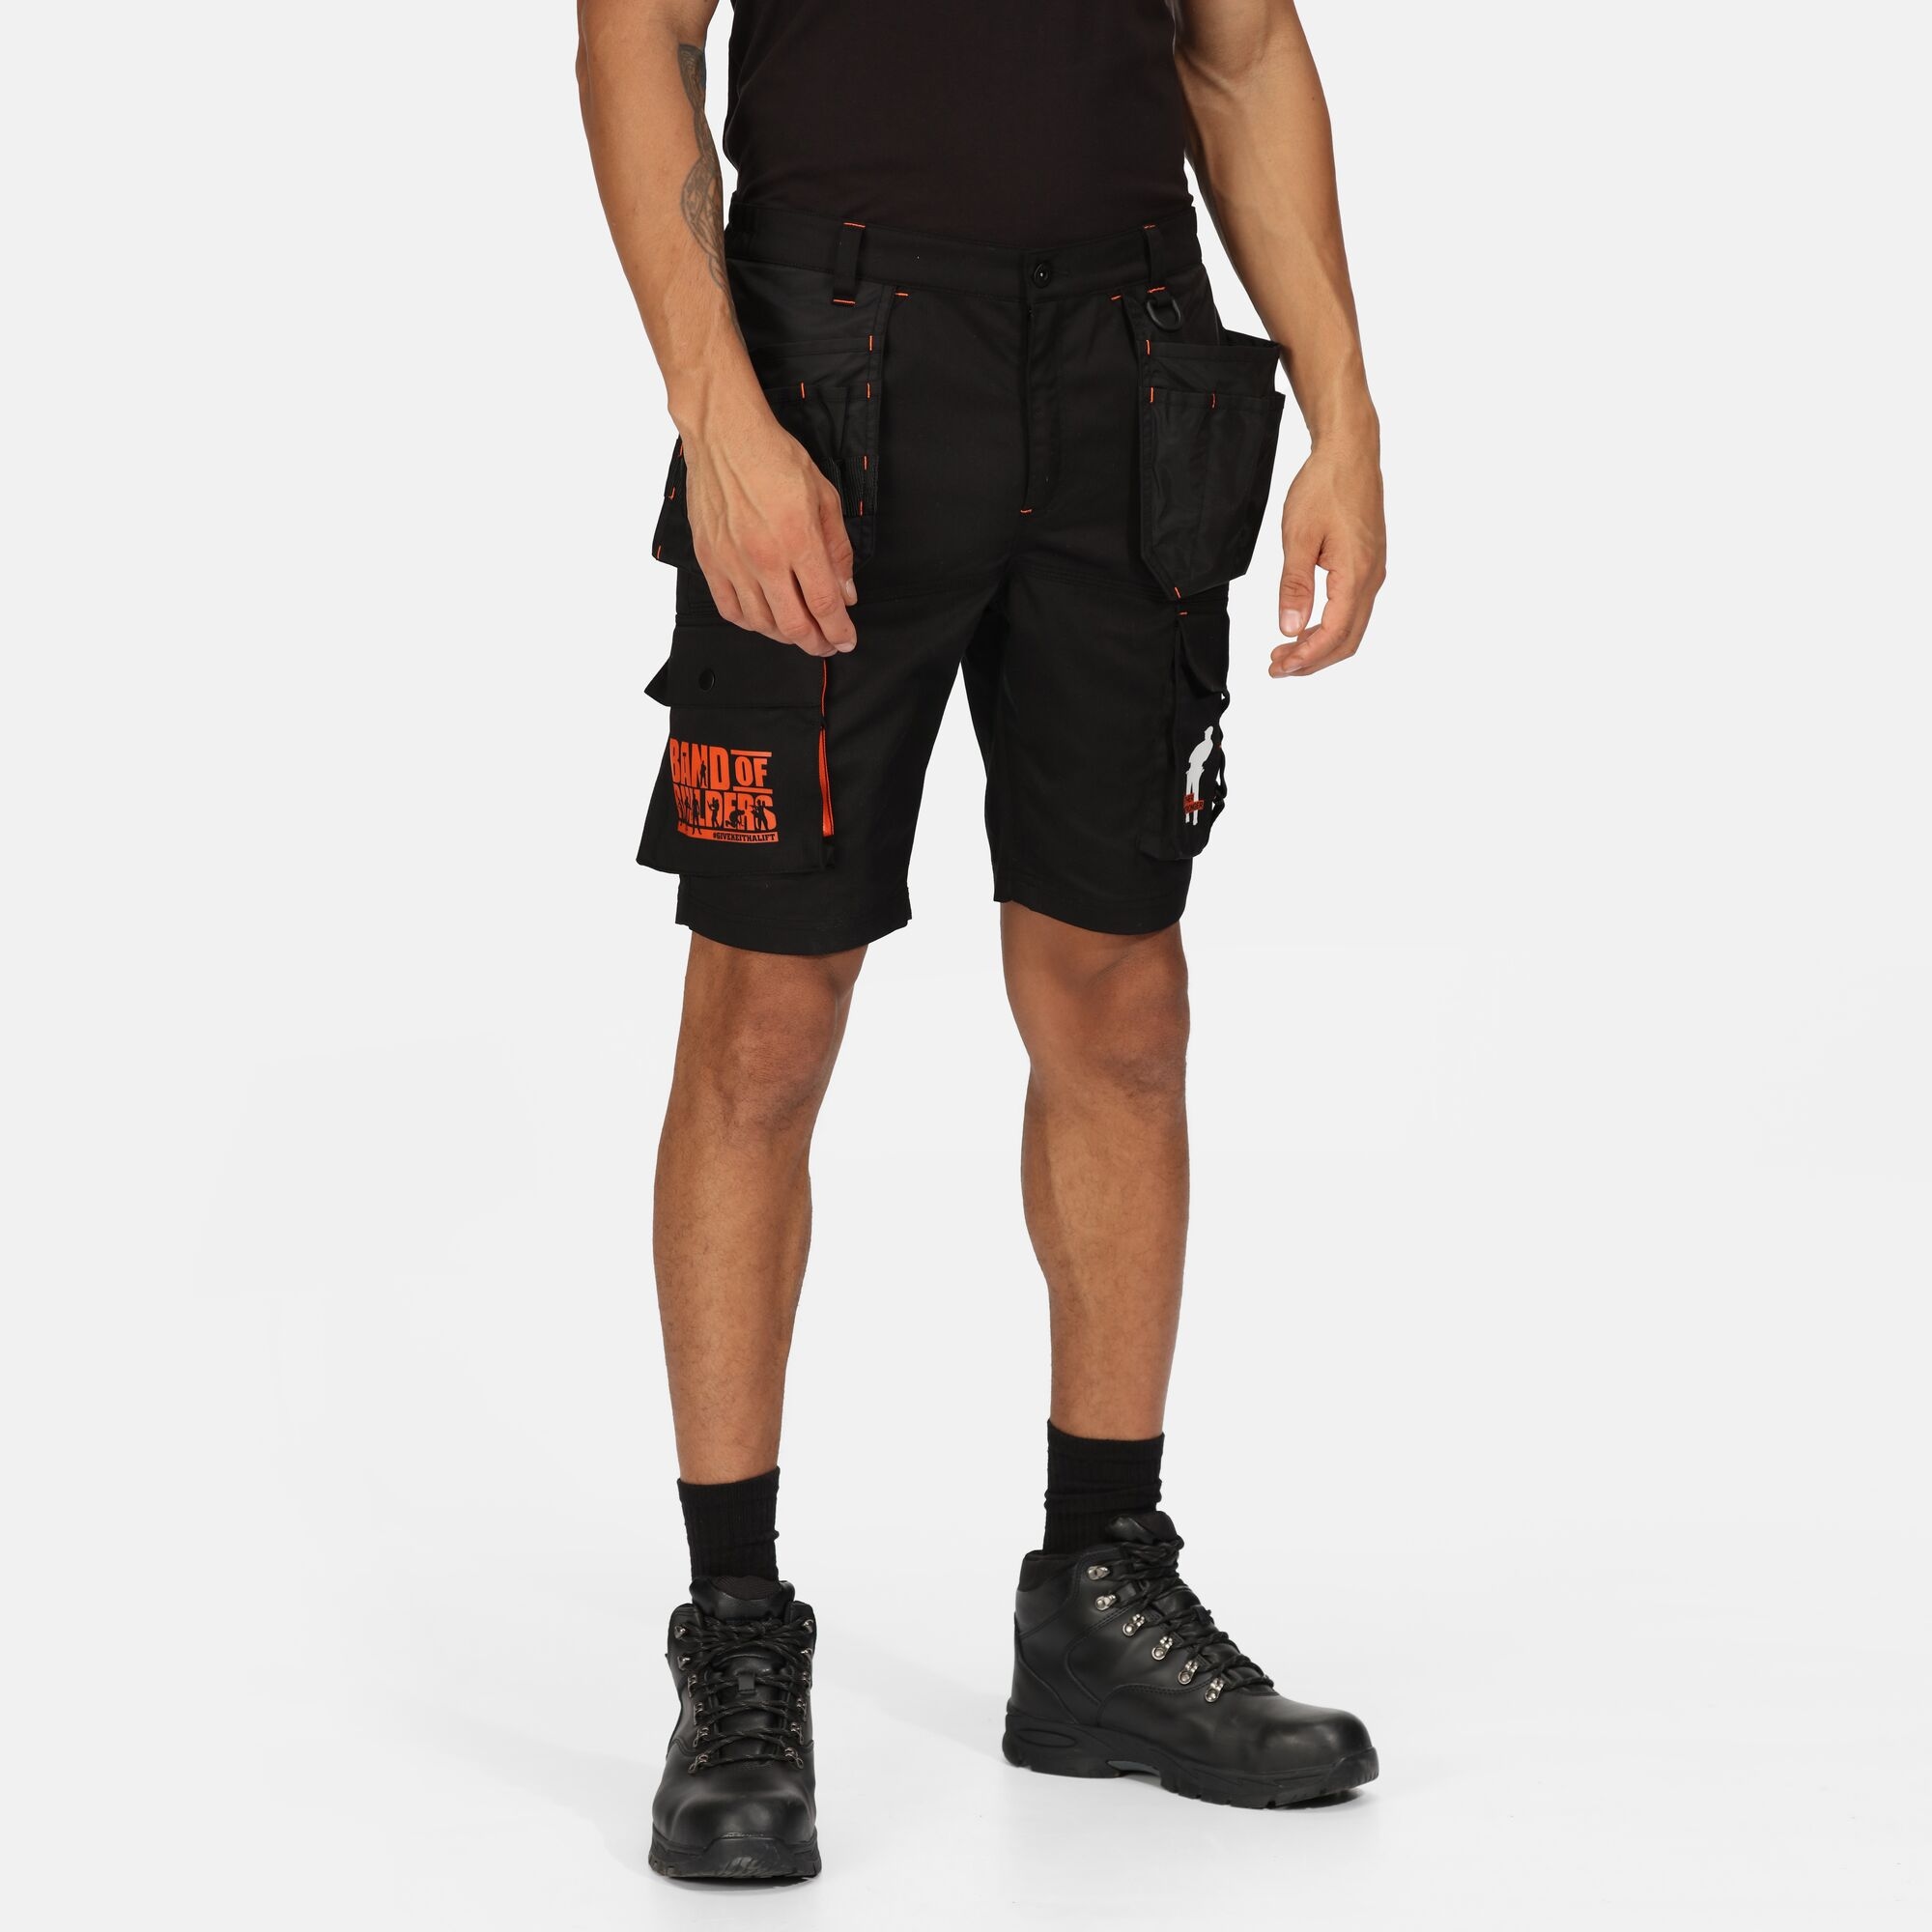 Regatta Professional Water Repellent Band of Builders Shorts Black, Size: 38 from Regatta IE